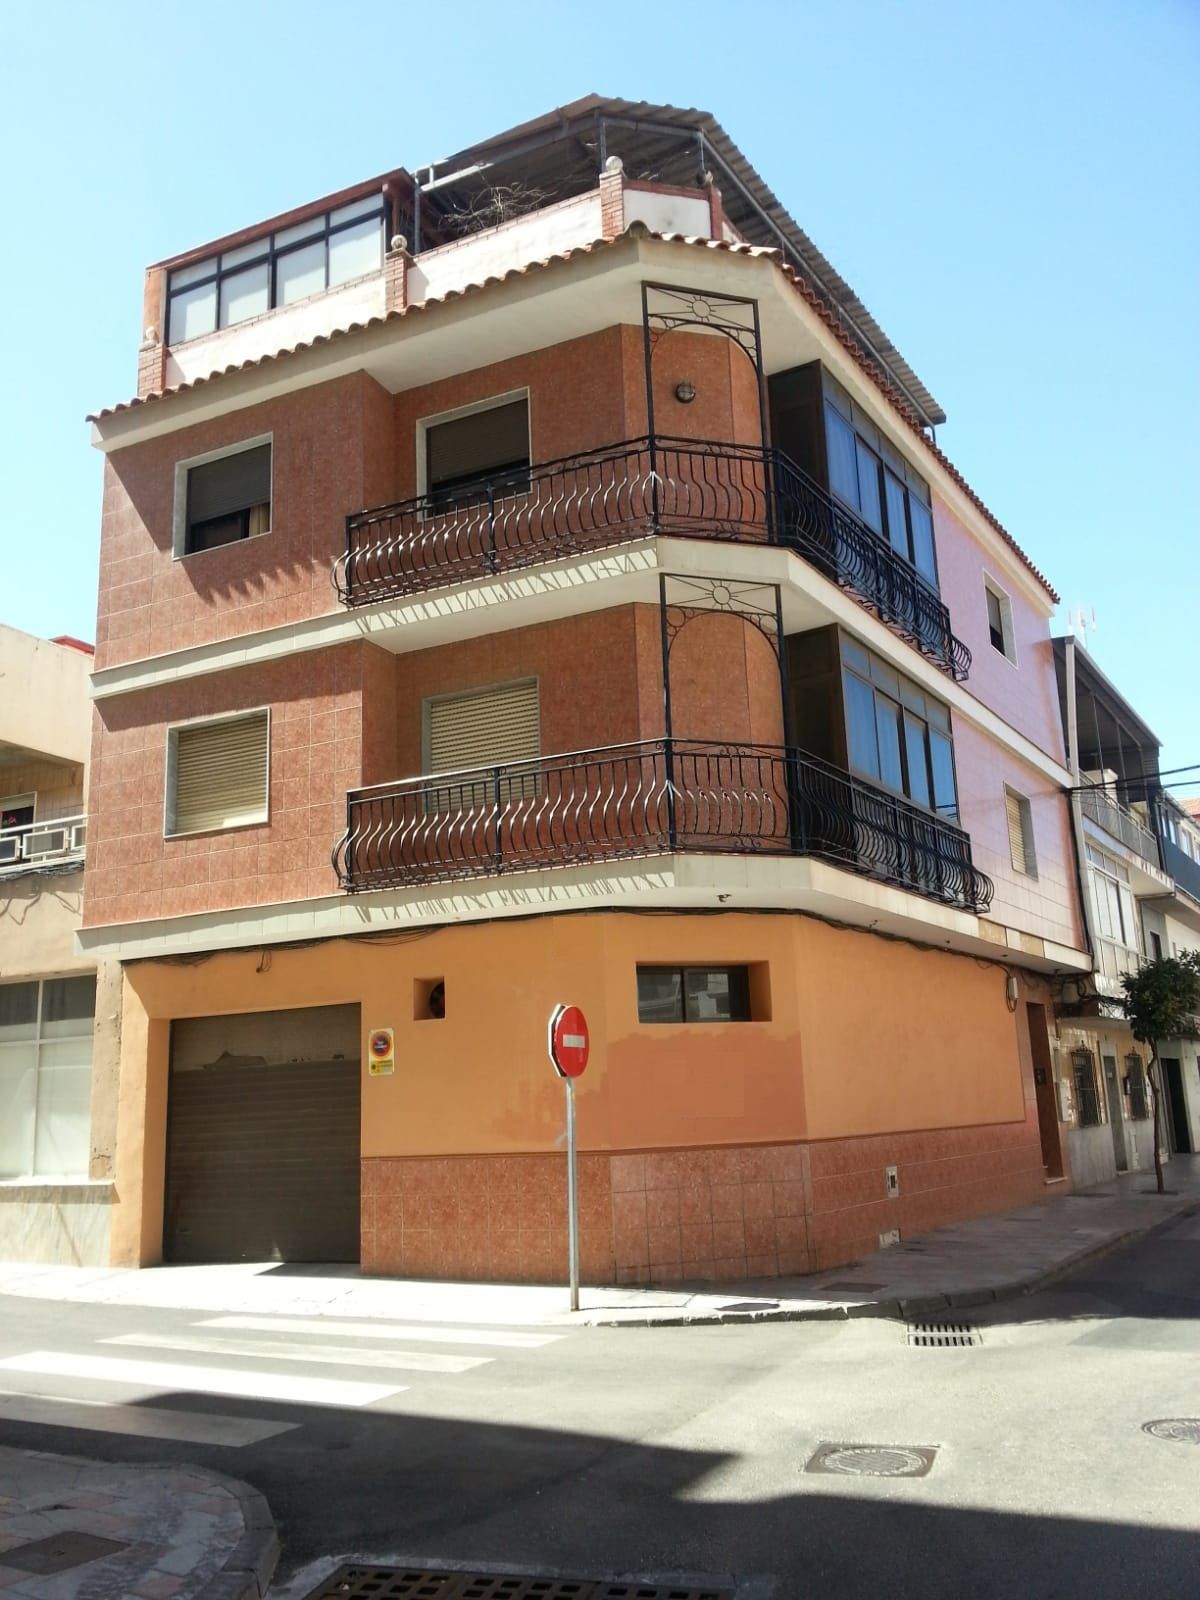 Bygning i Fuengirola, salg